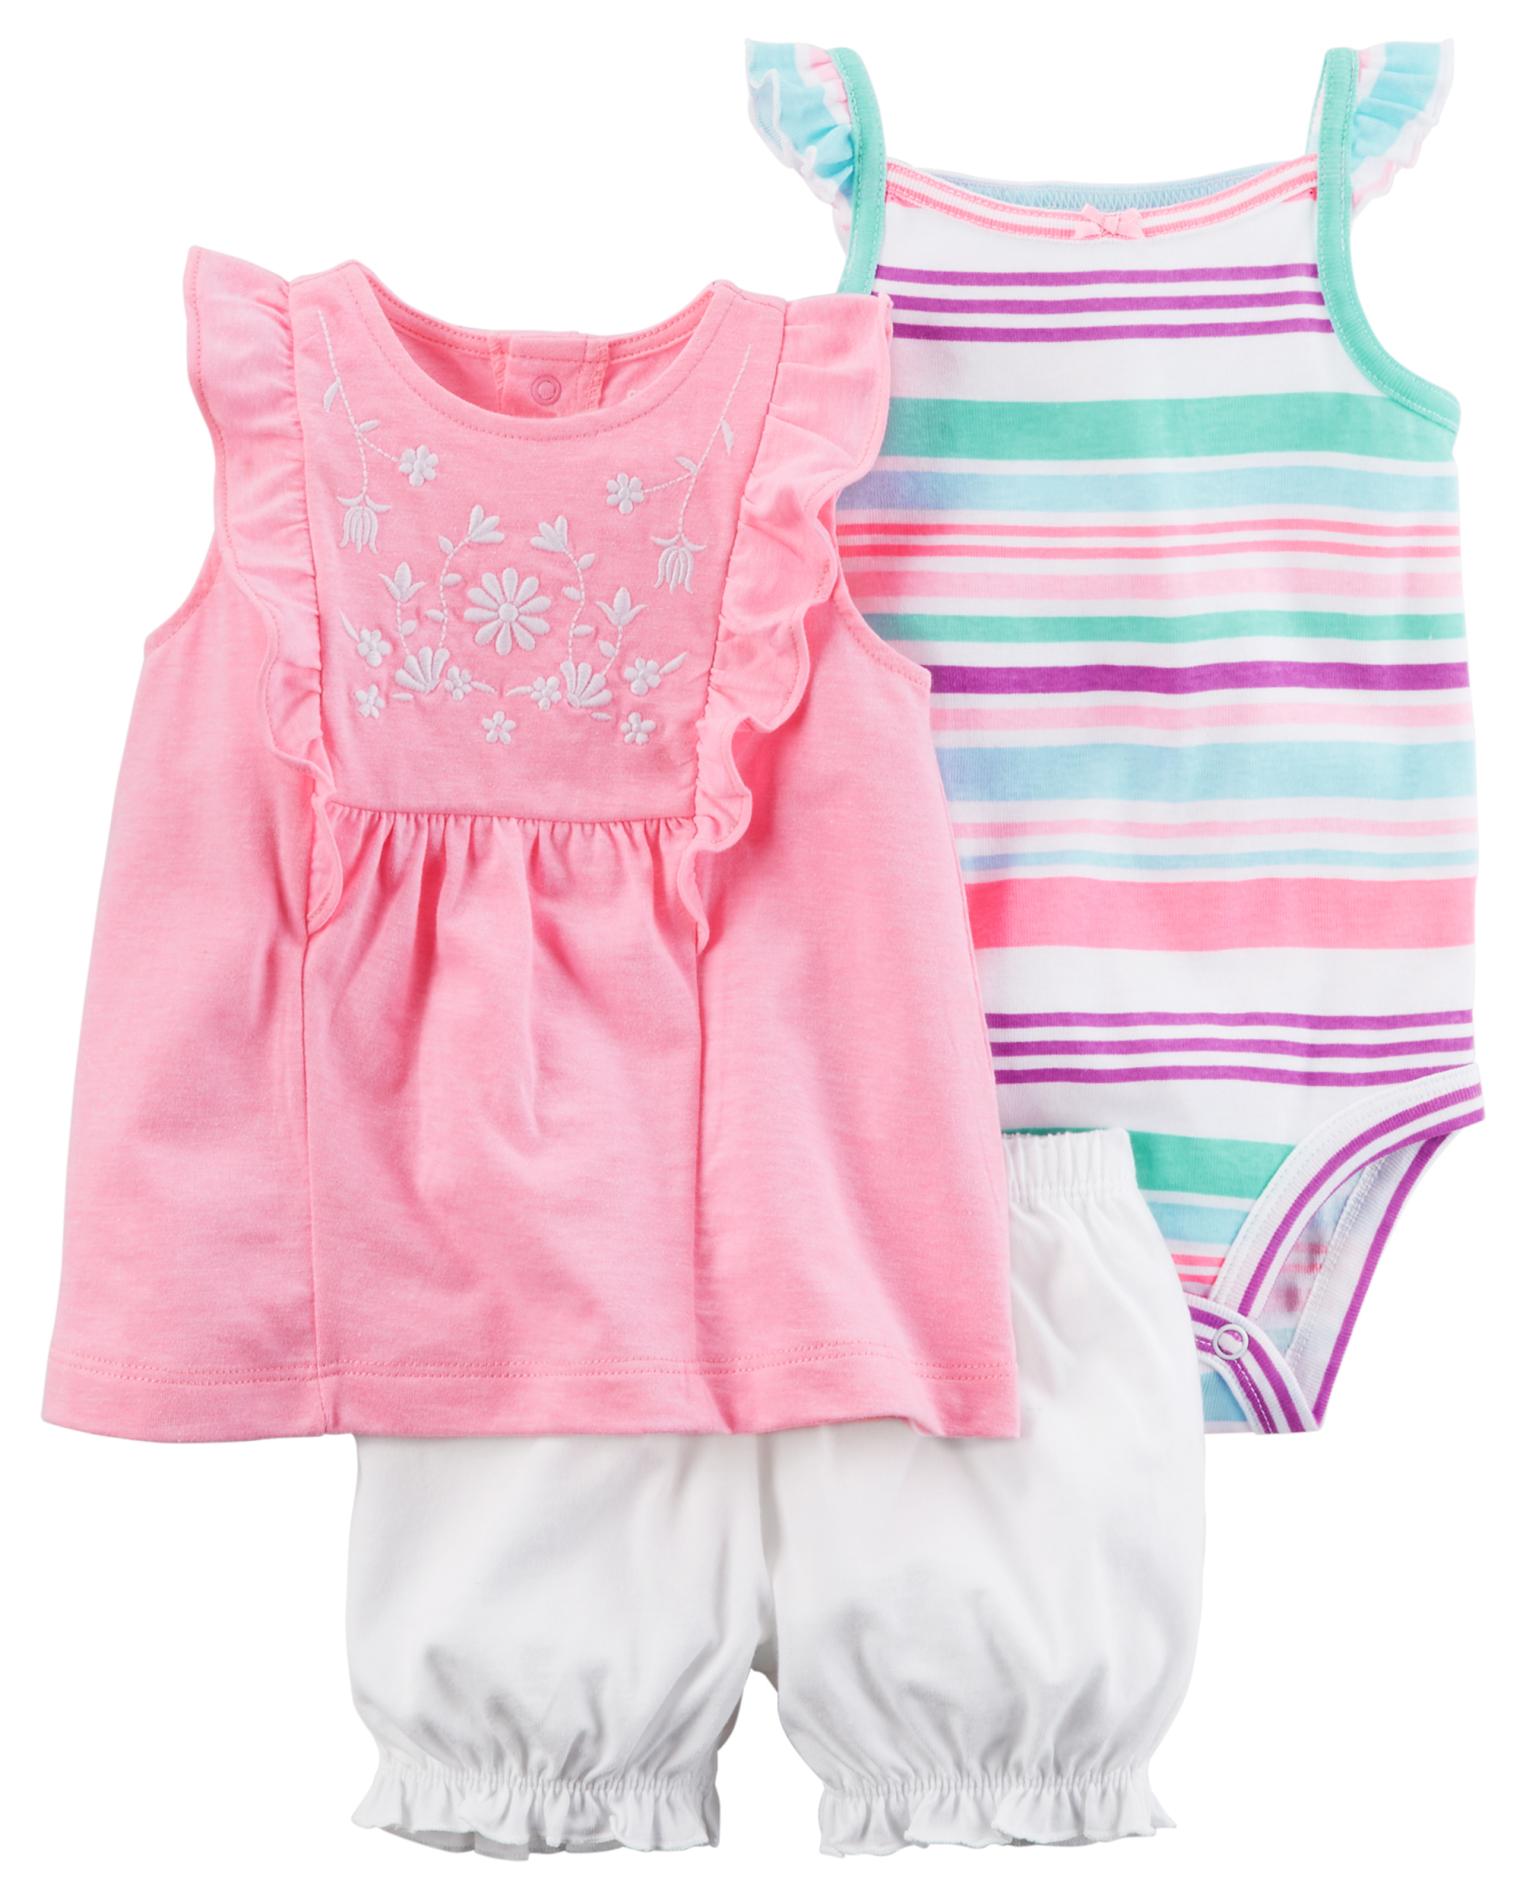 Carter's Newborn & Infant Girls' Bodysuit, Tank Top & Diaper Cover - Striped